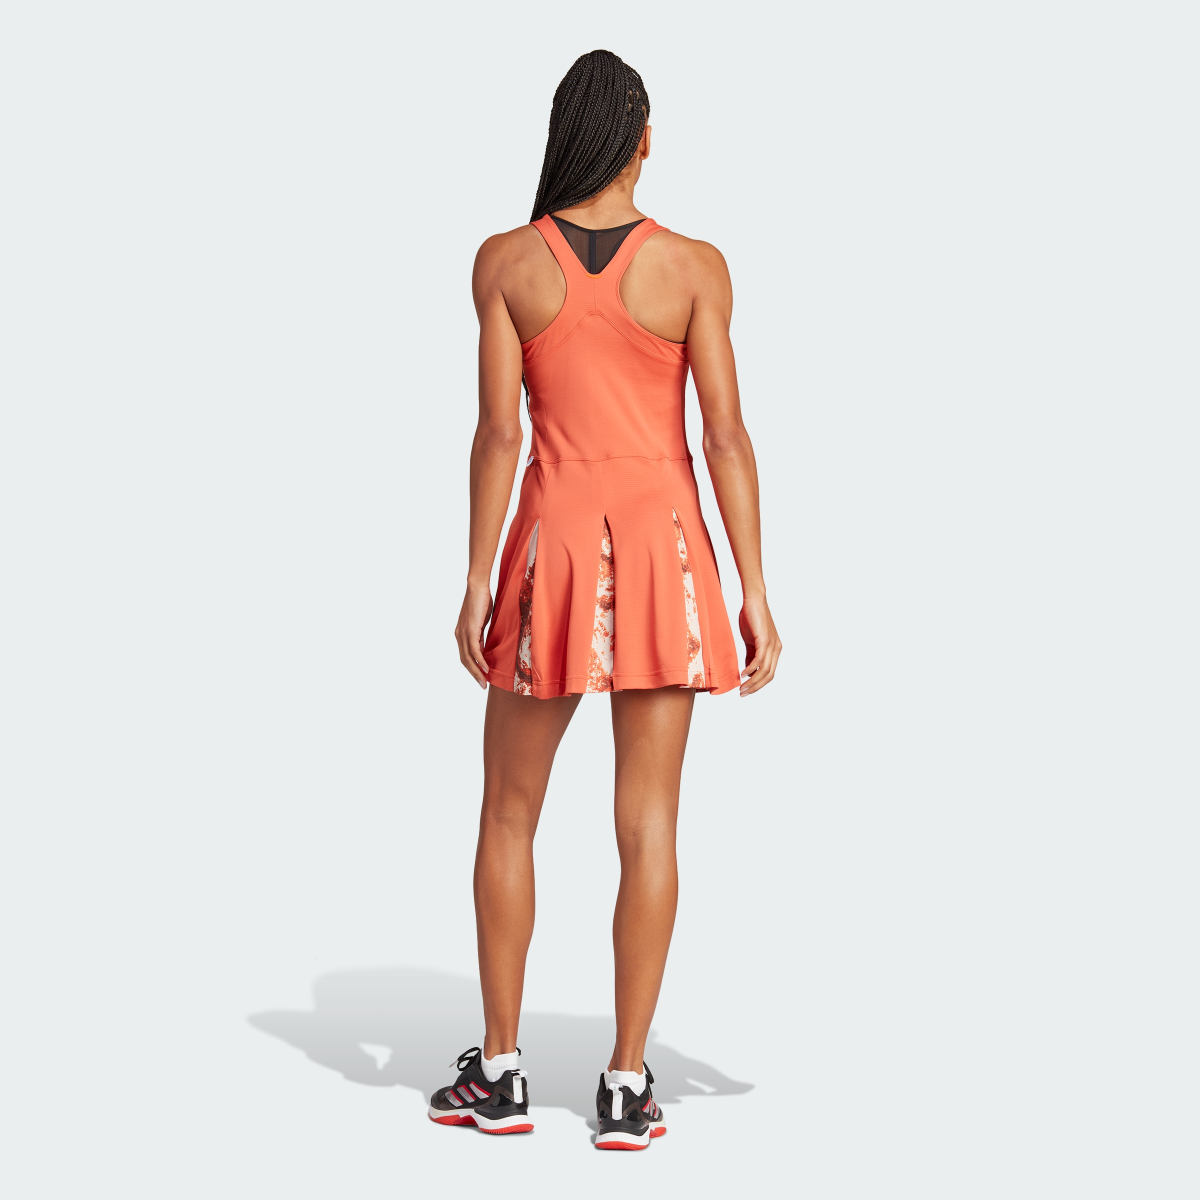 Adidas Tennis Paris Made to Be Remade Dress - HU1814